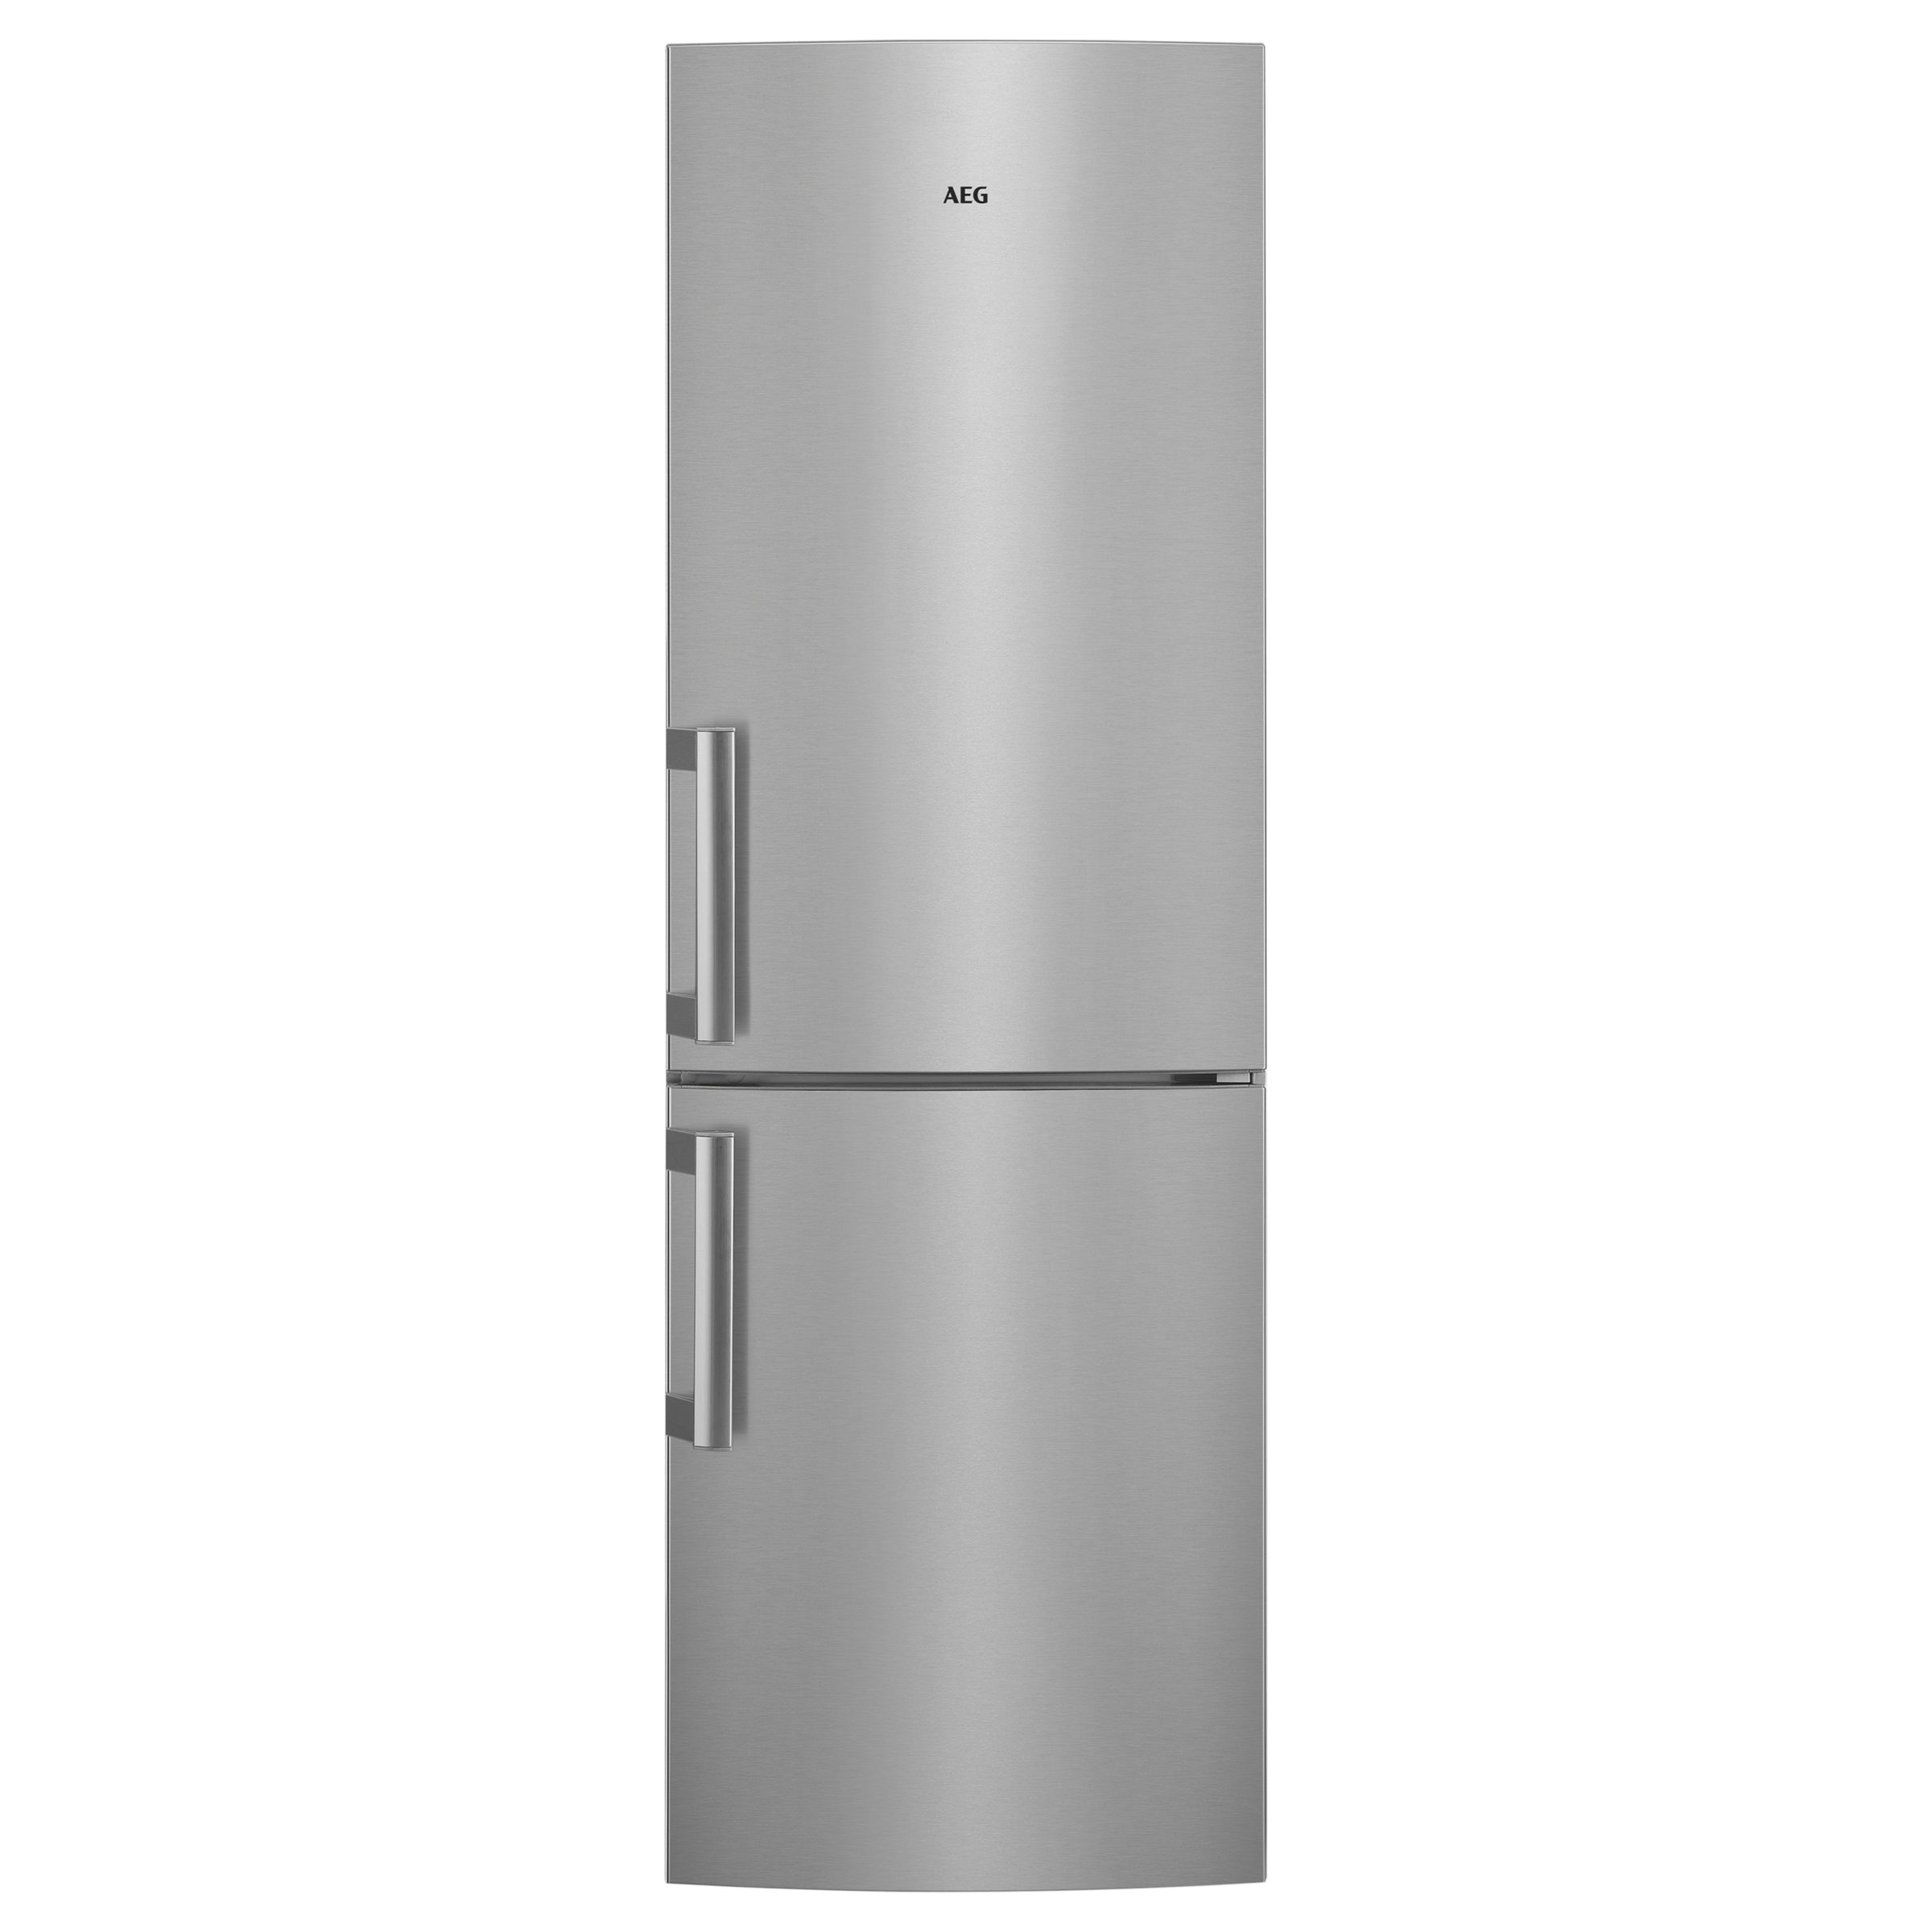 AEG RCB53325VX Freestanding CustomFlex Fridge Freezer, A++ Energy Rating, 60cm Wide, Silver